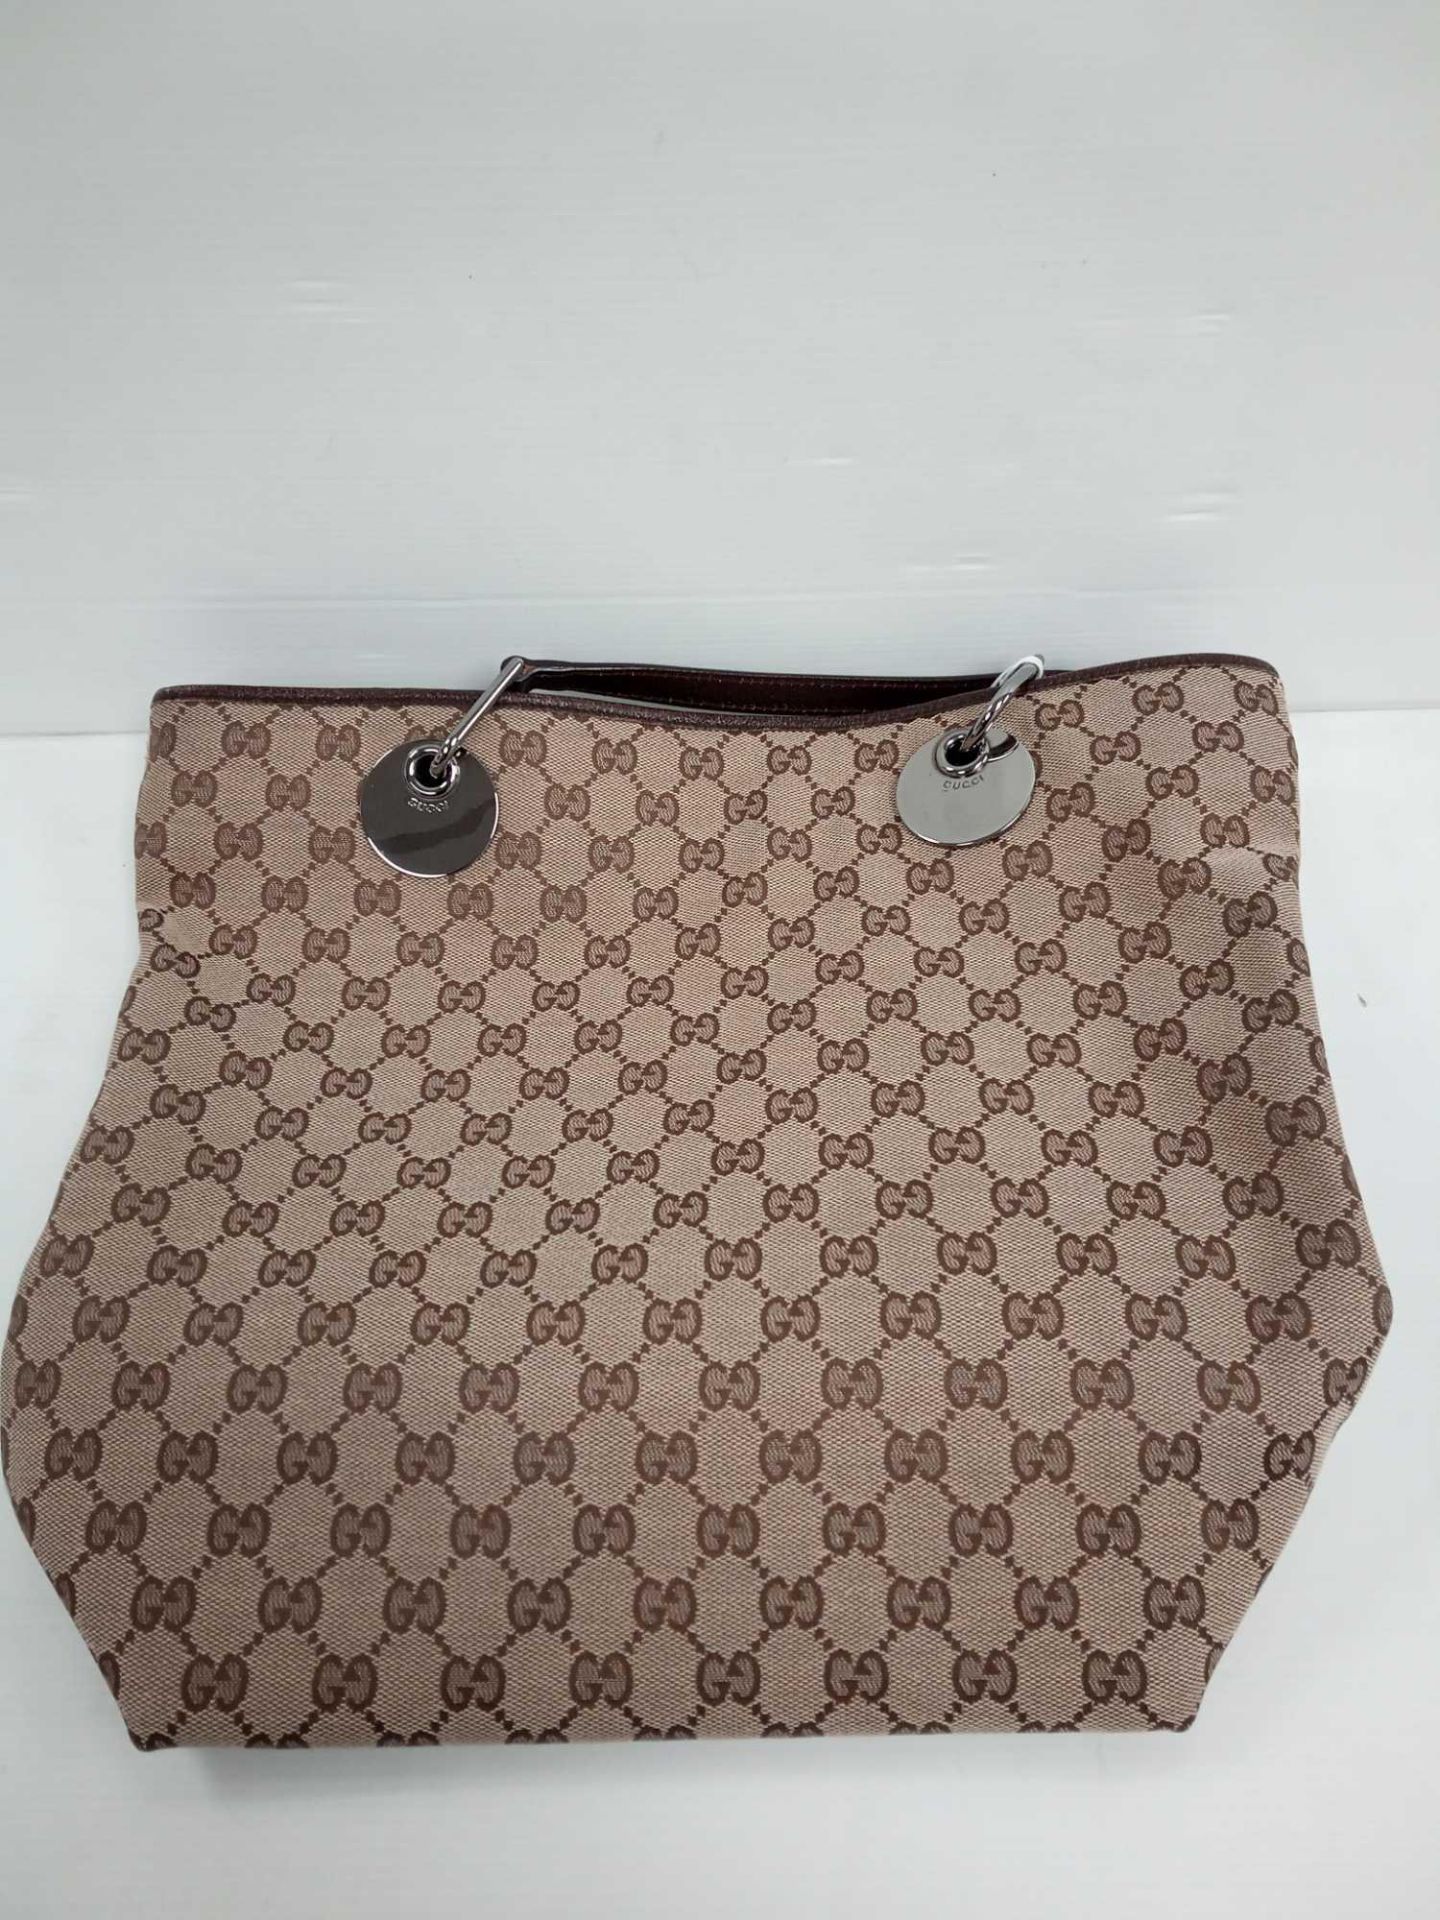 RRP 1550 Gucci Eclipse Tall Tote Beige/Dark Brown Shoulder Bag (Aao5624) Grade A (Appraisals